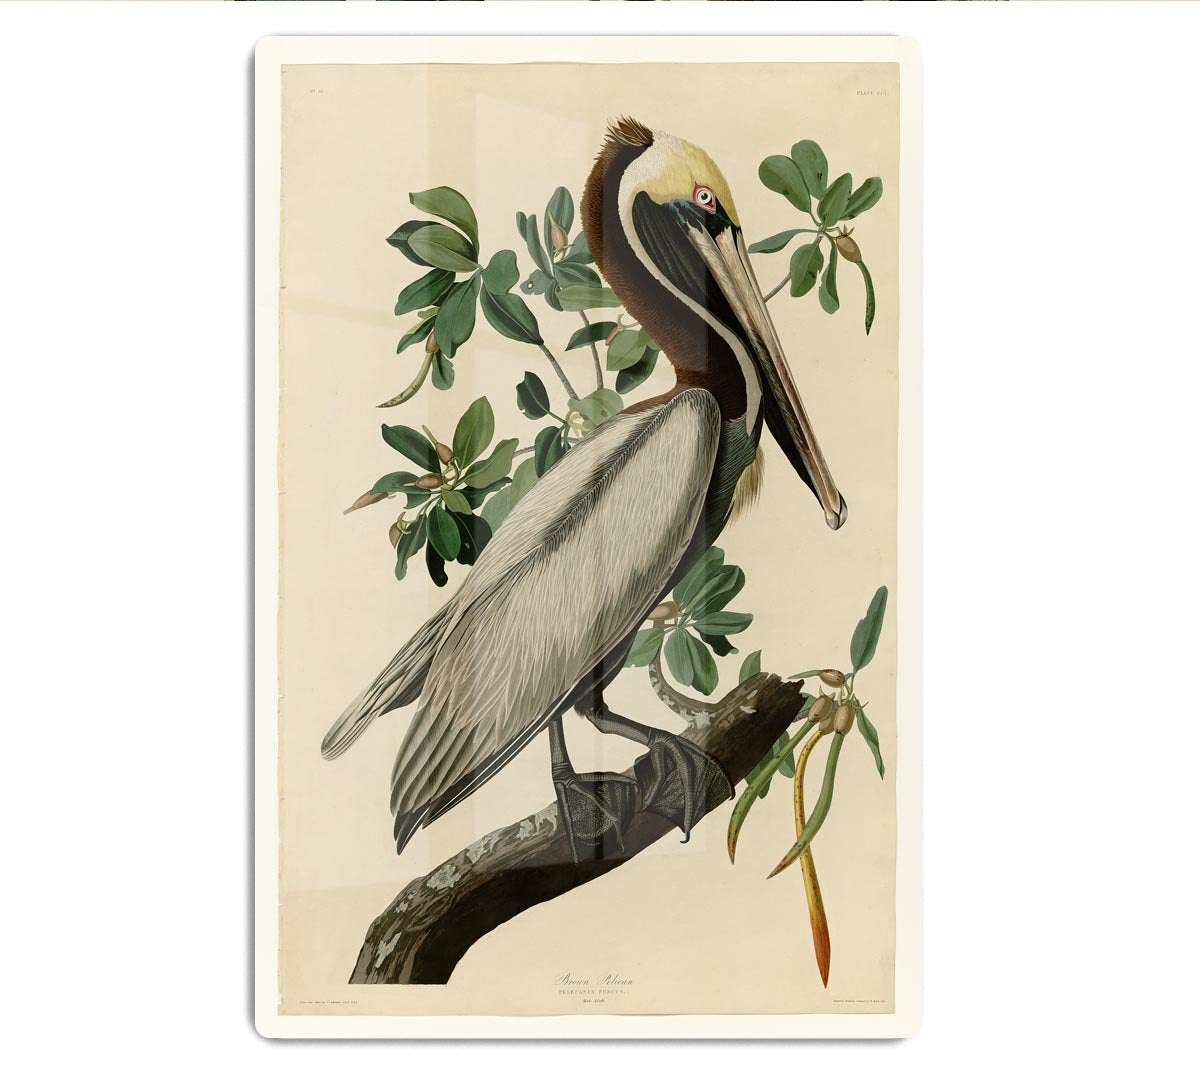 Brown Pelican 2 by Audubon HD Metal Print - Canvas Art Rocks - 1